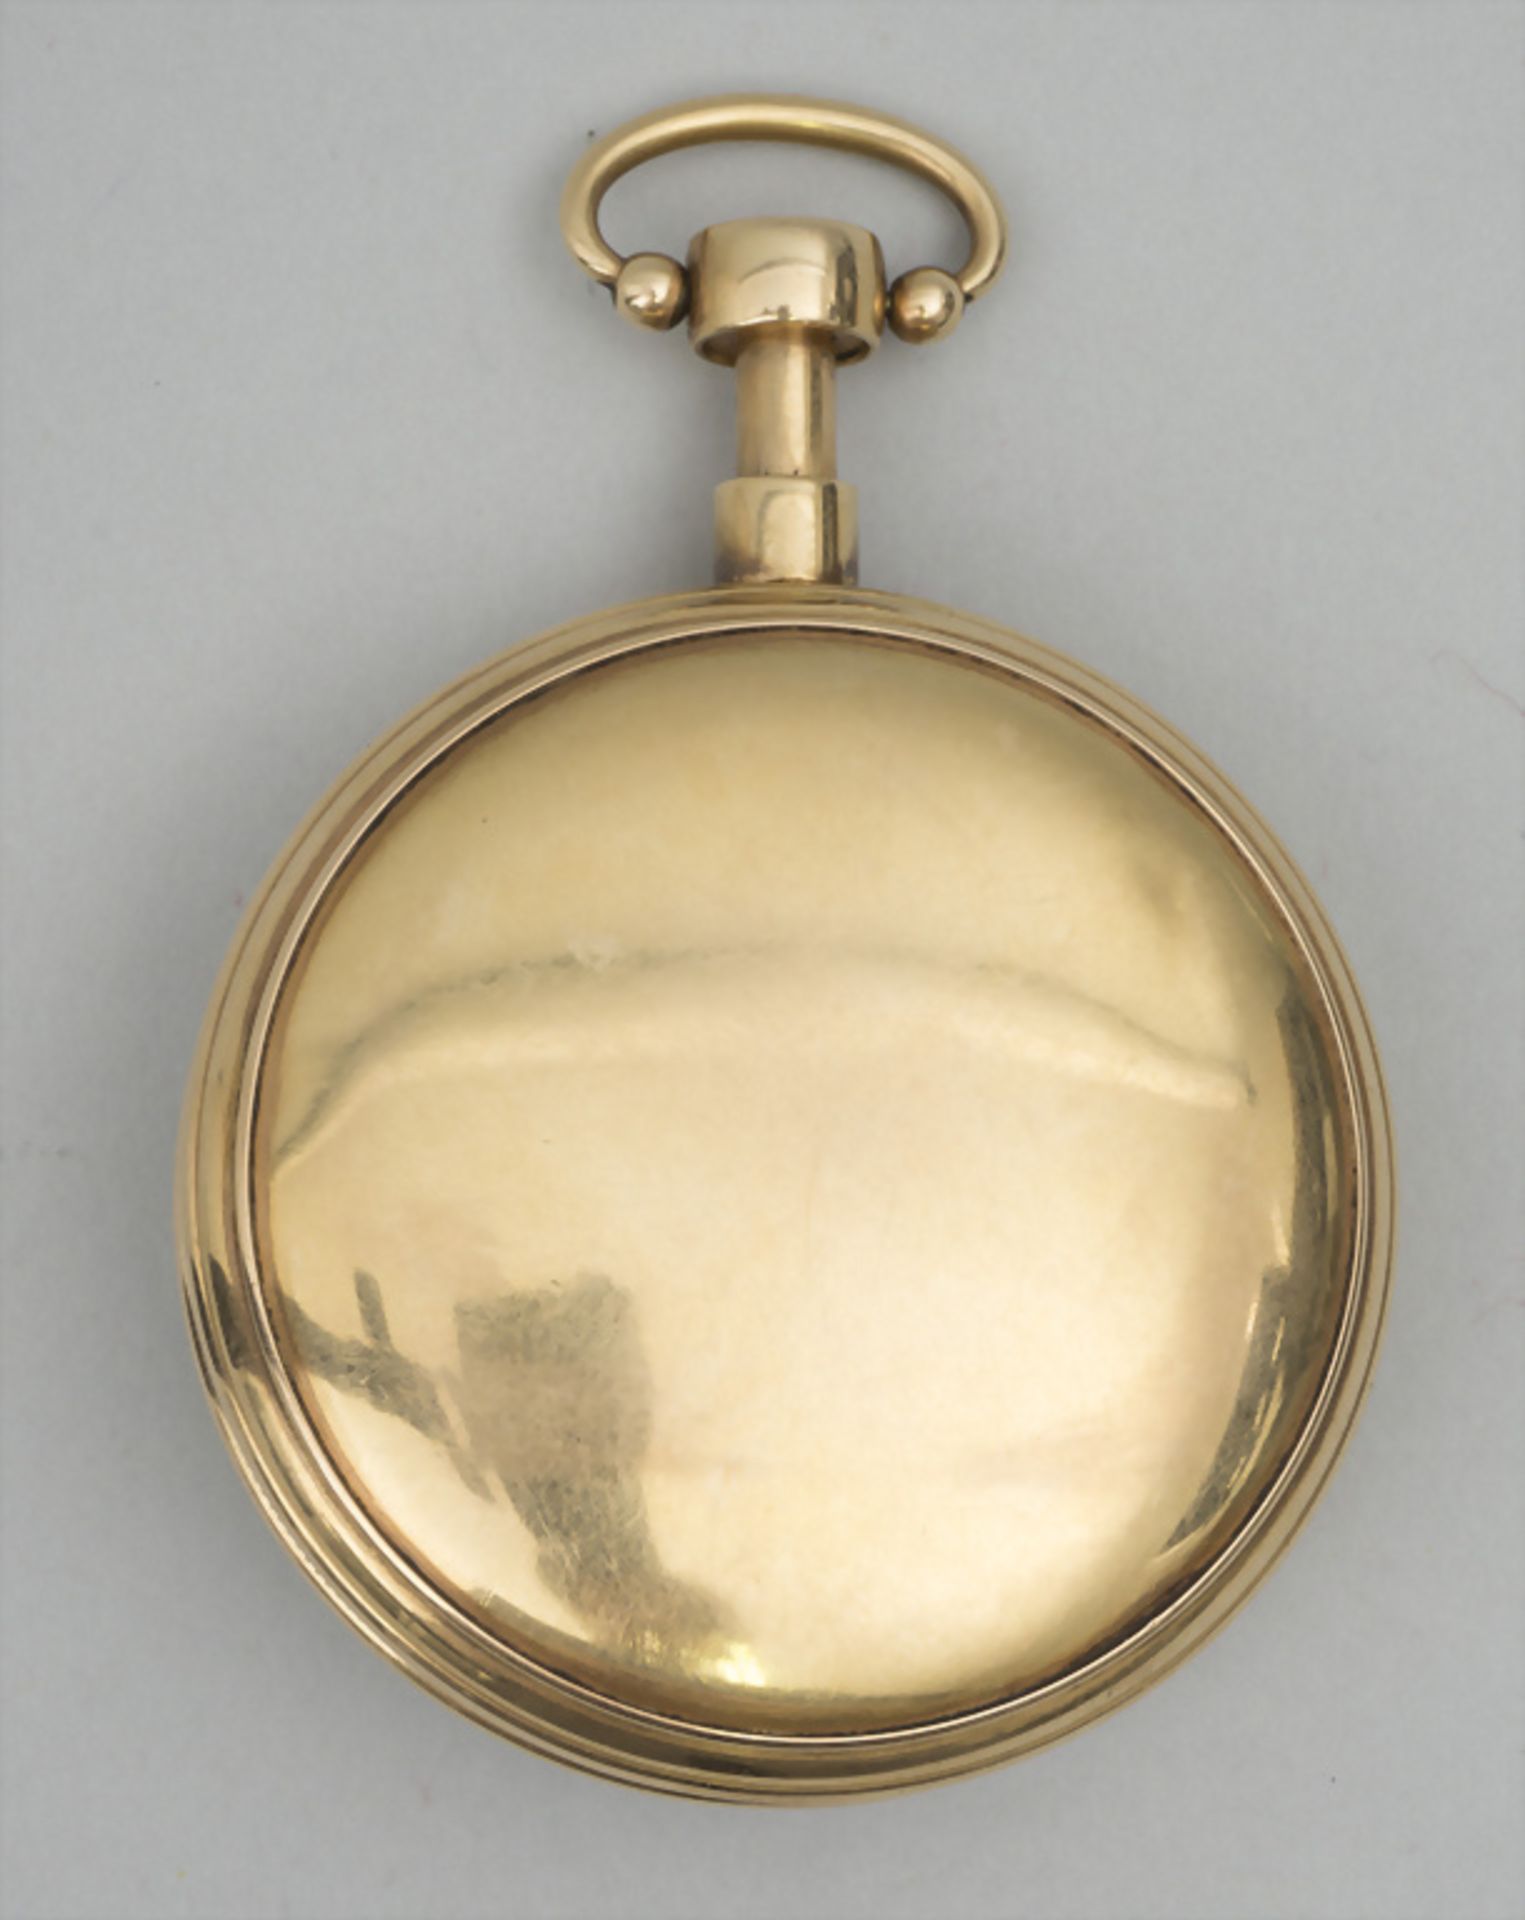 Offene Taschenuhr / An 18k gold open faced watch, Emile Moré à Geneve, Genf, um 1800 - Image 5 of 5